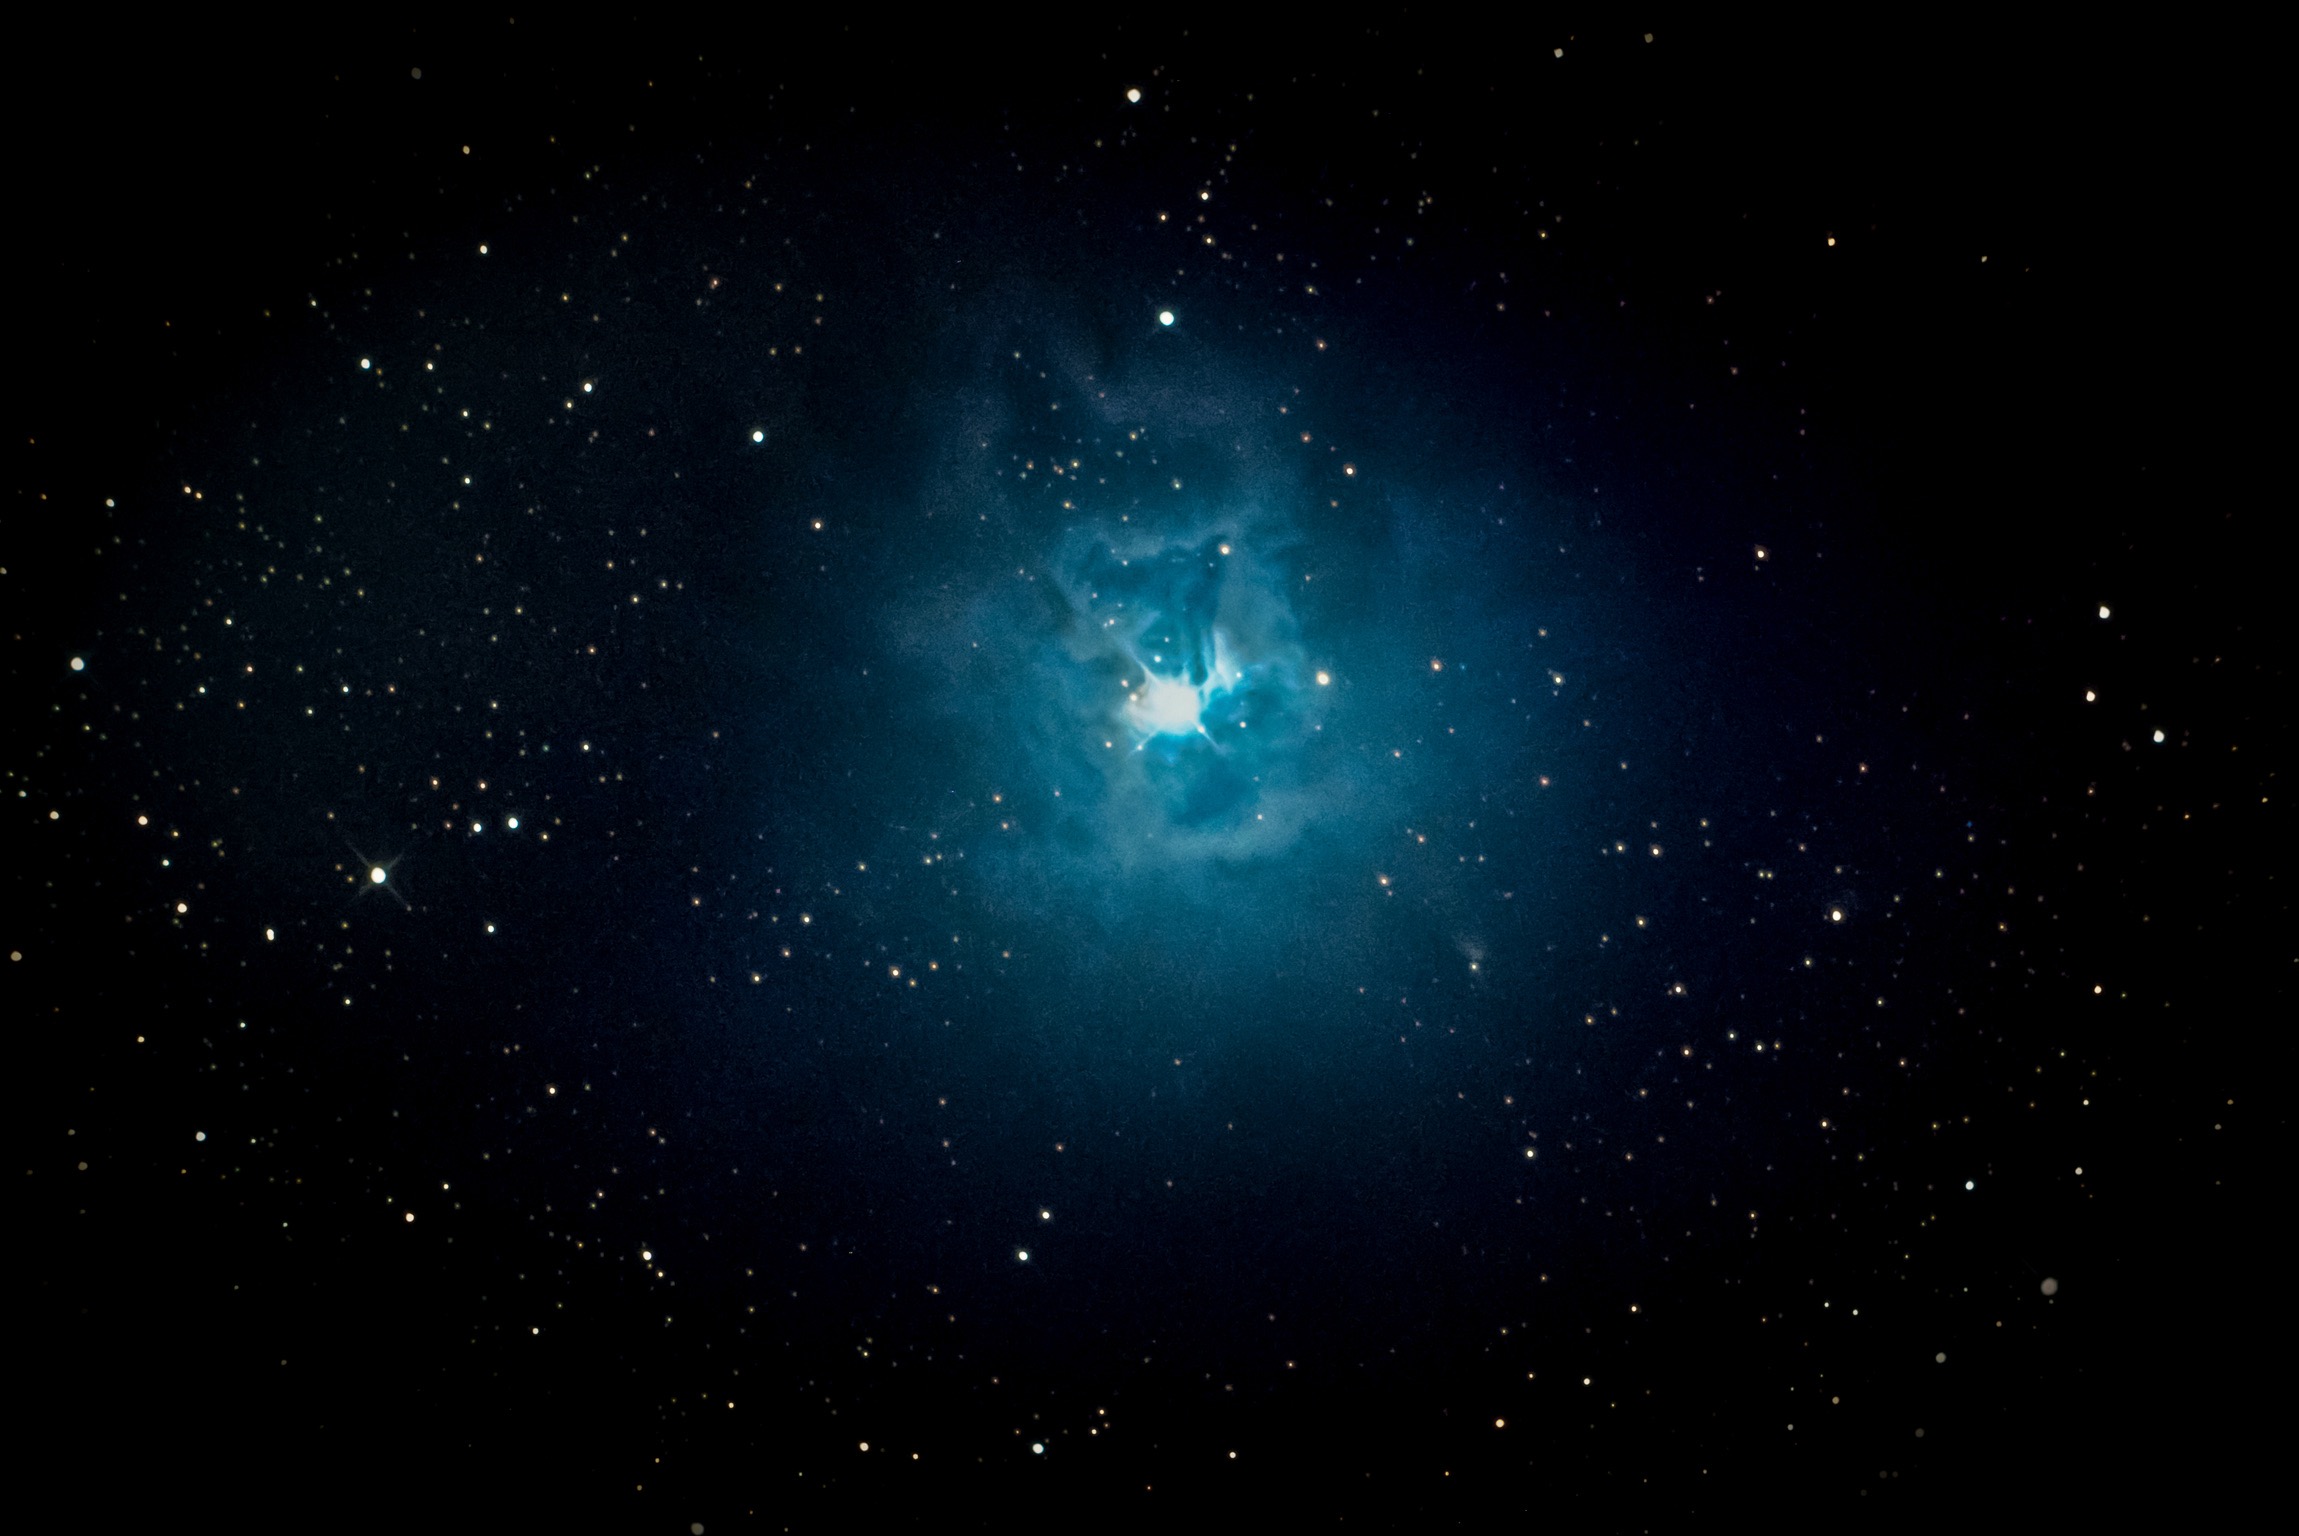 “Iris Nebula” is a bright reflection nebula in the constellation Cepheus.